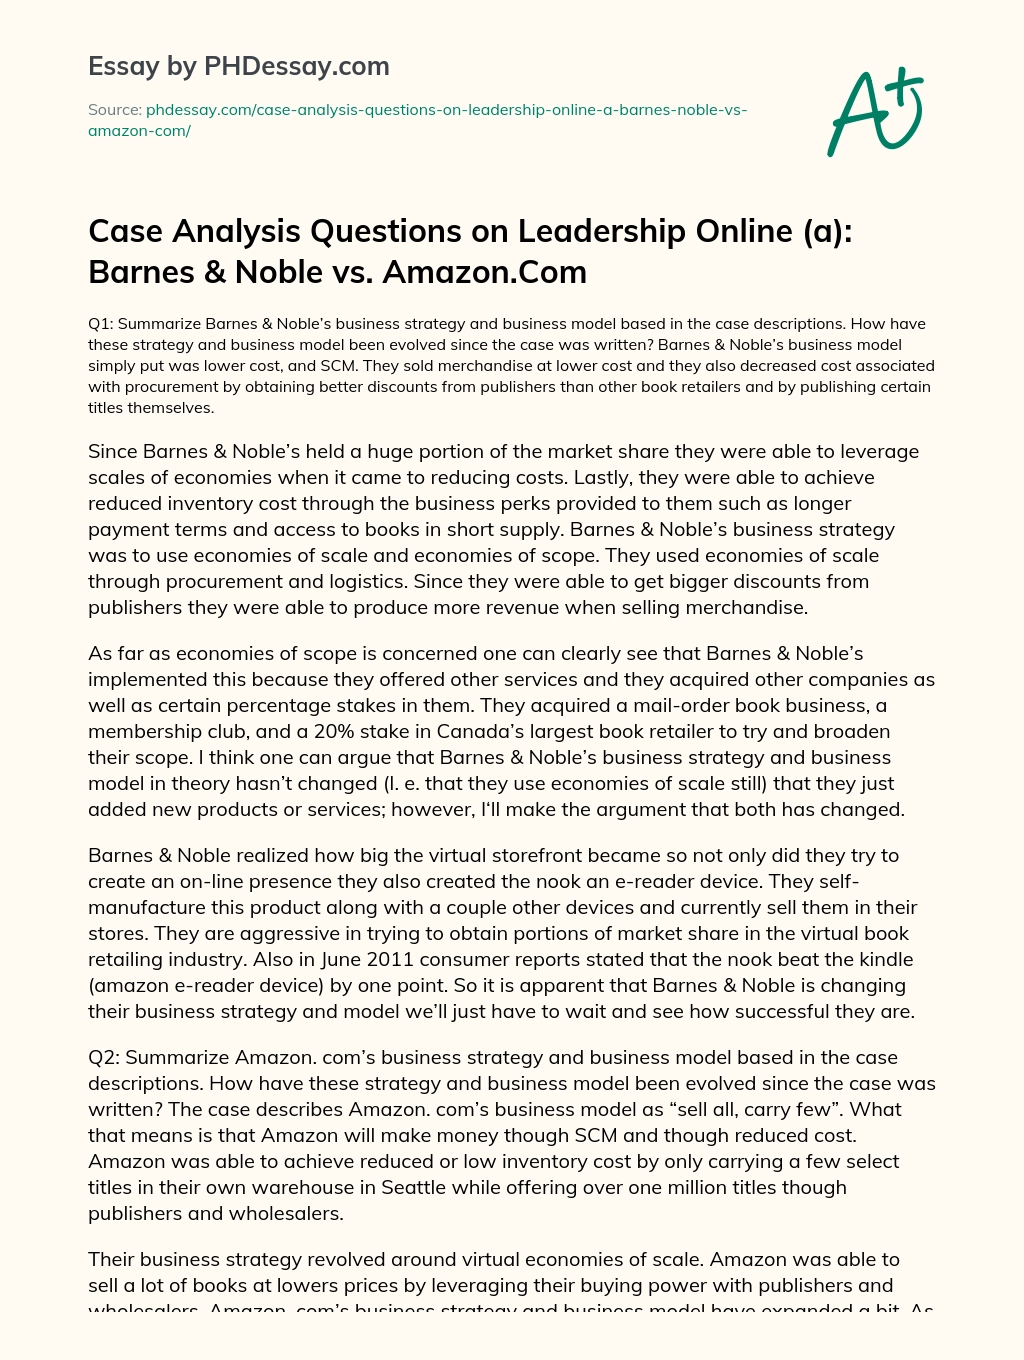 Case Analysis Questions on Leadership Online (a): Barnes & Noble vs. Amazon.Com essay